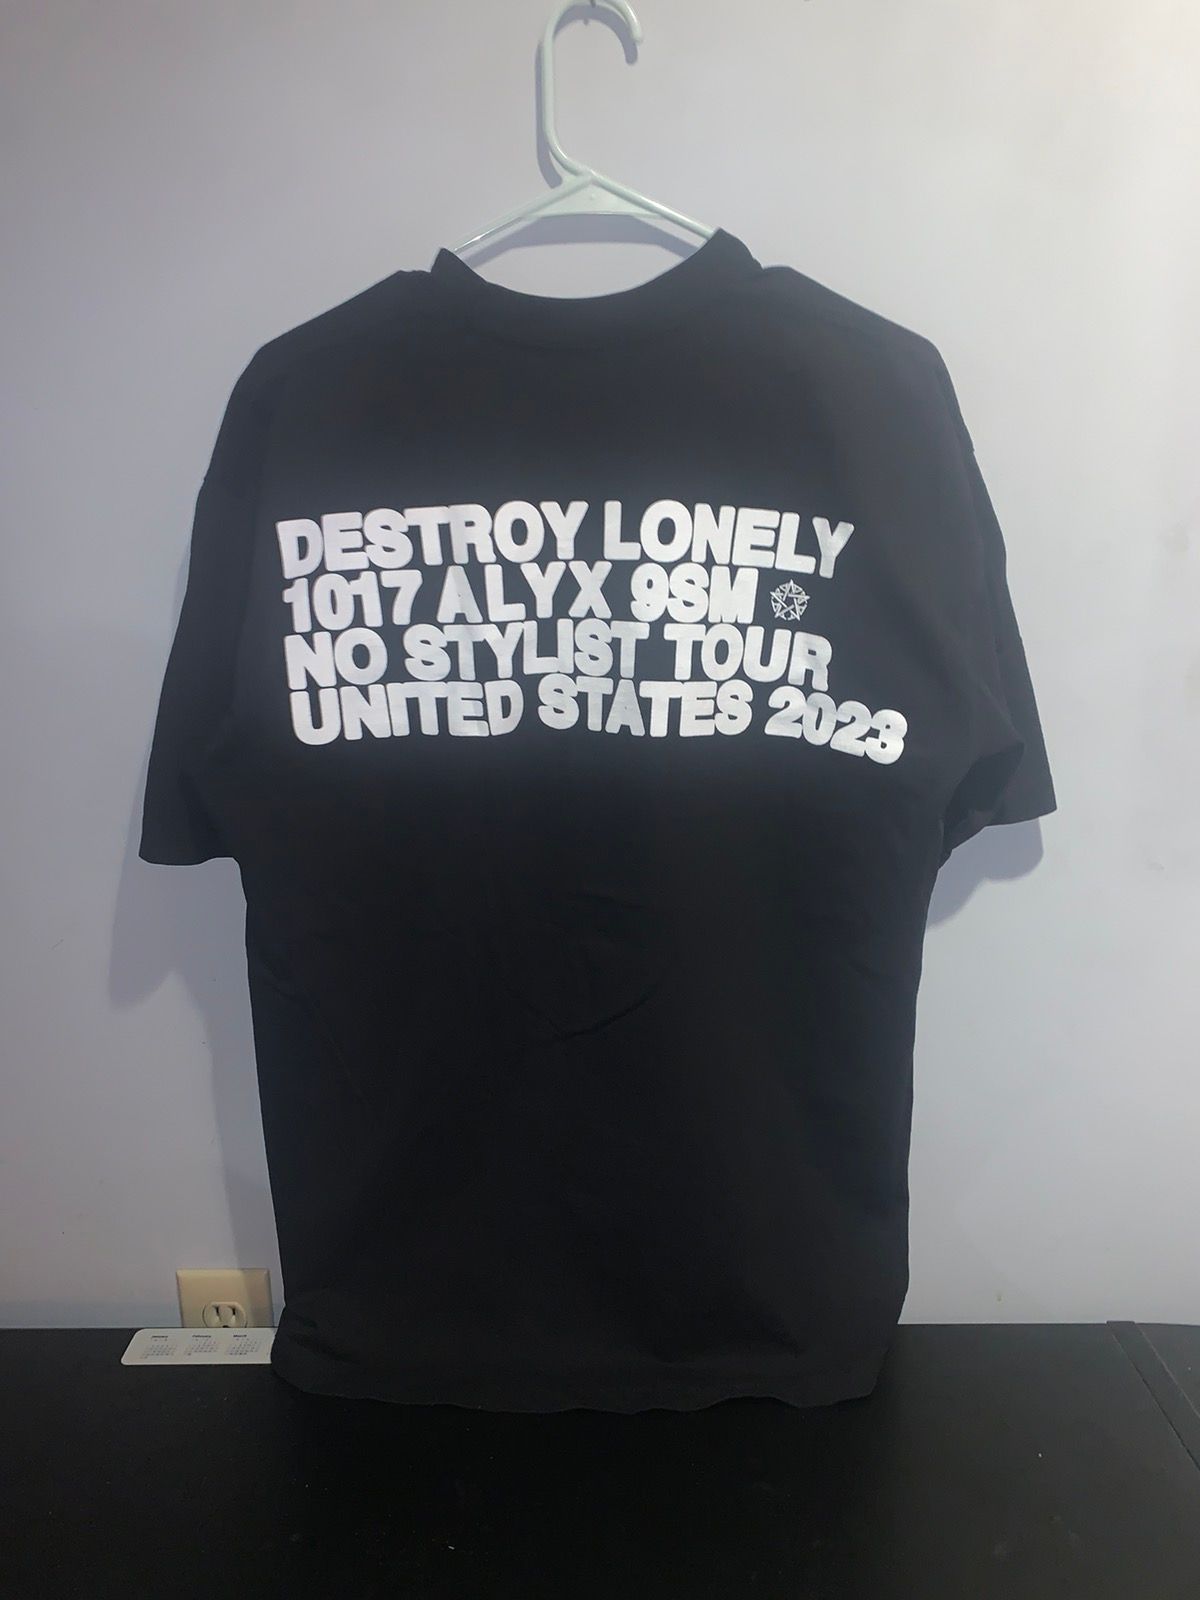 1017 ALYX 9SM Destroy Lonely Alyx Tee 2nd Leg - Brand New | Grailed